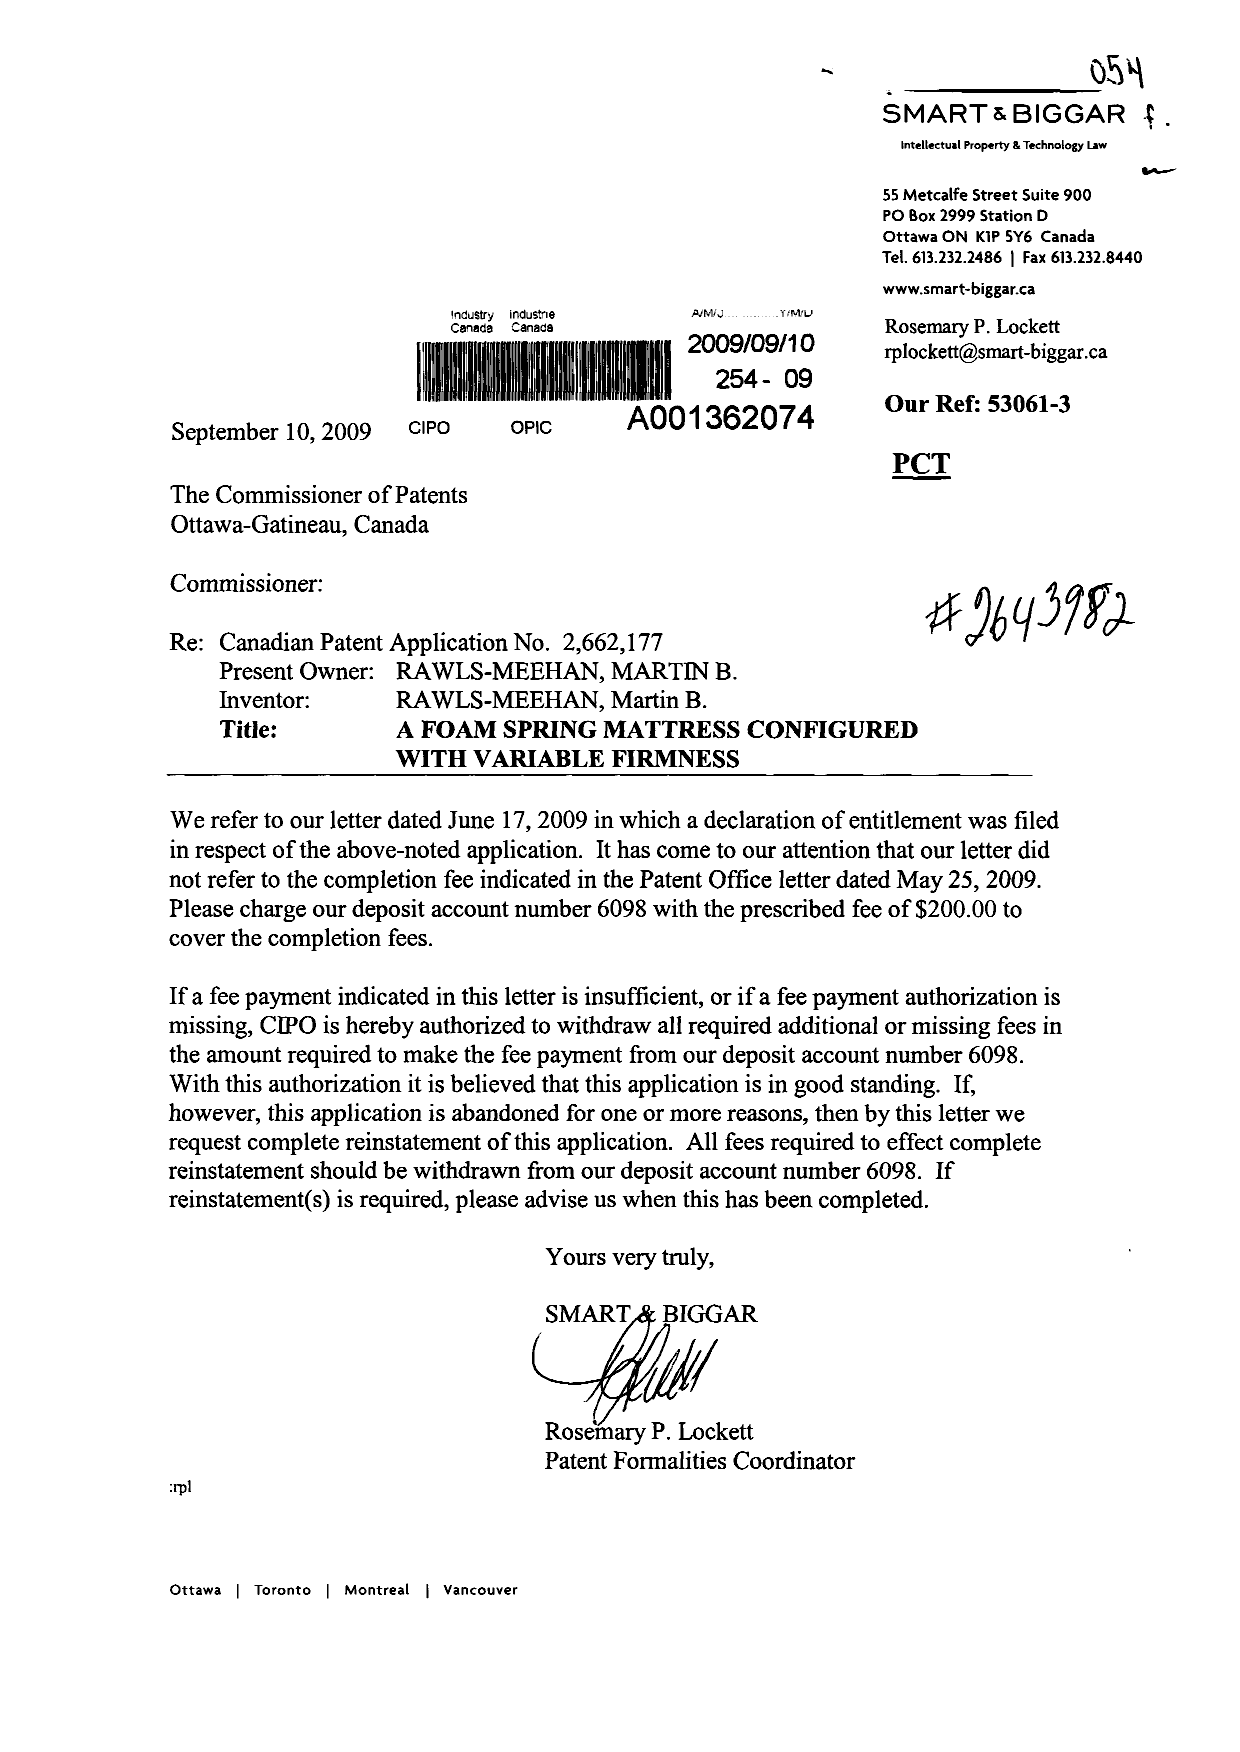 Canadian Patent Document 2662177. Correspondence 20090910. Image 1 of 1